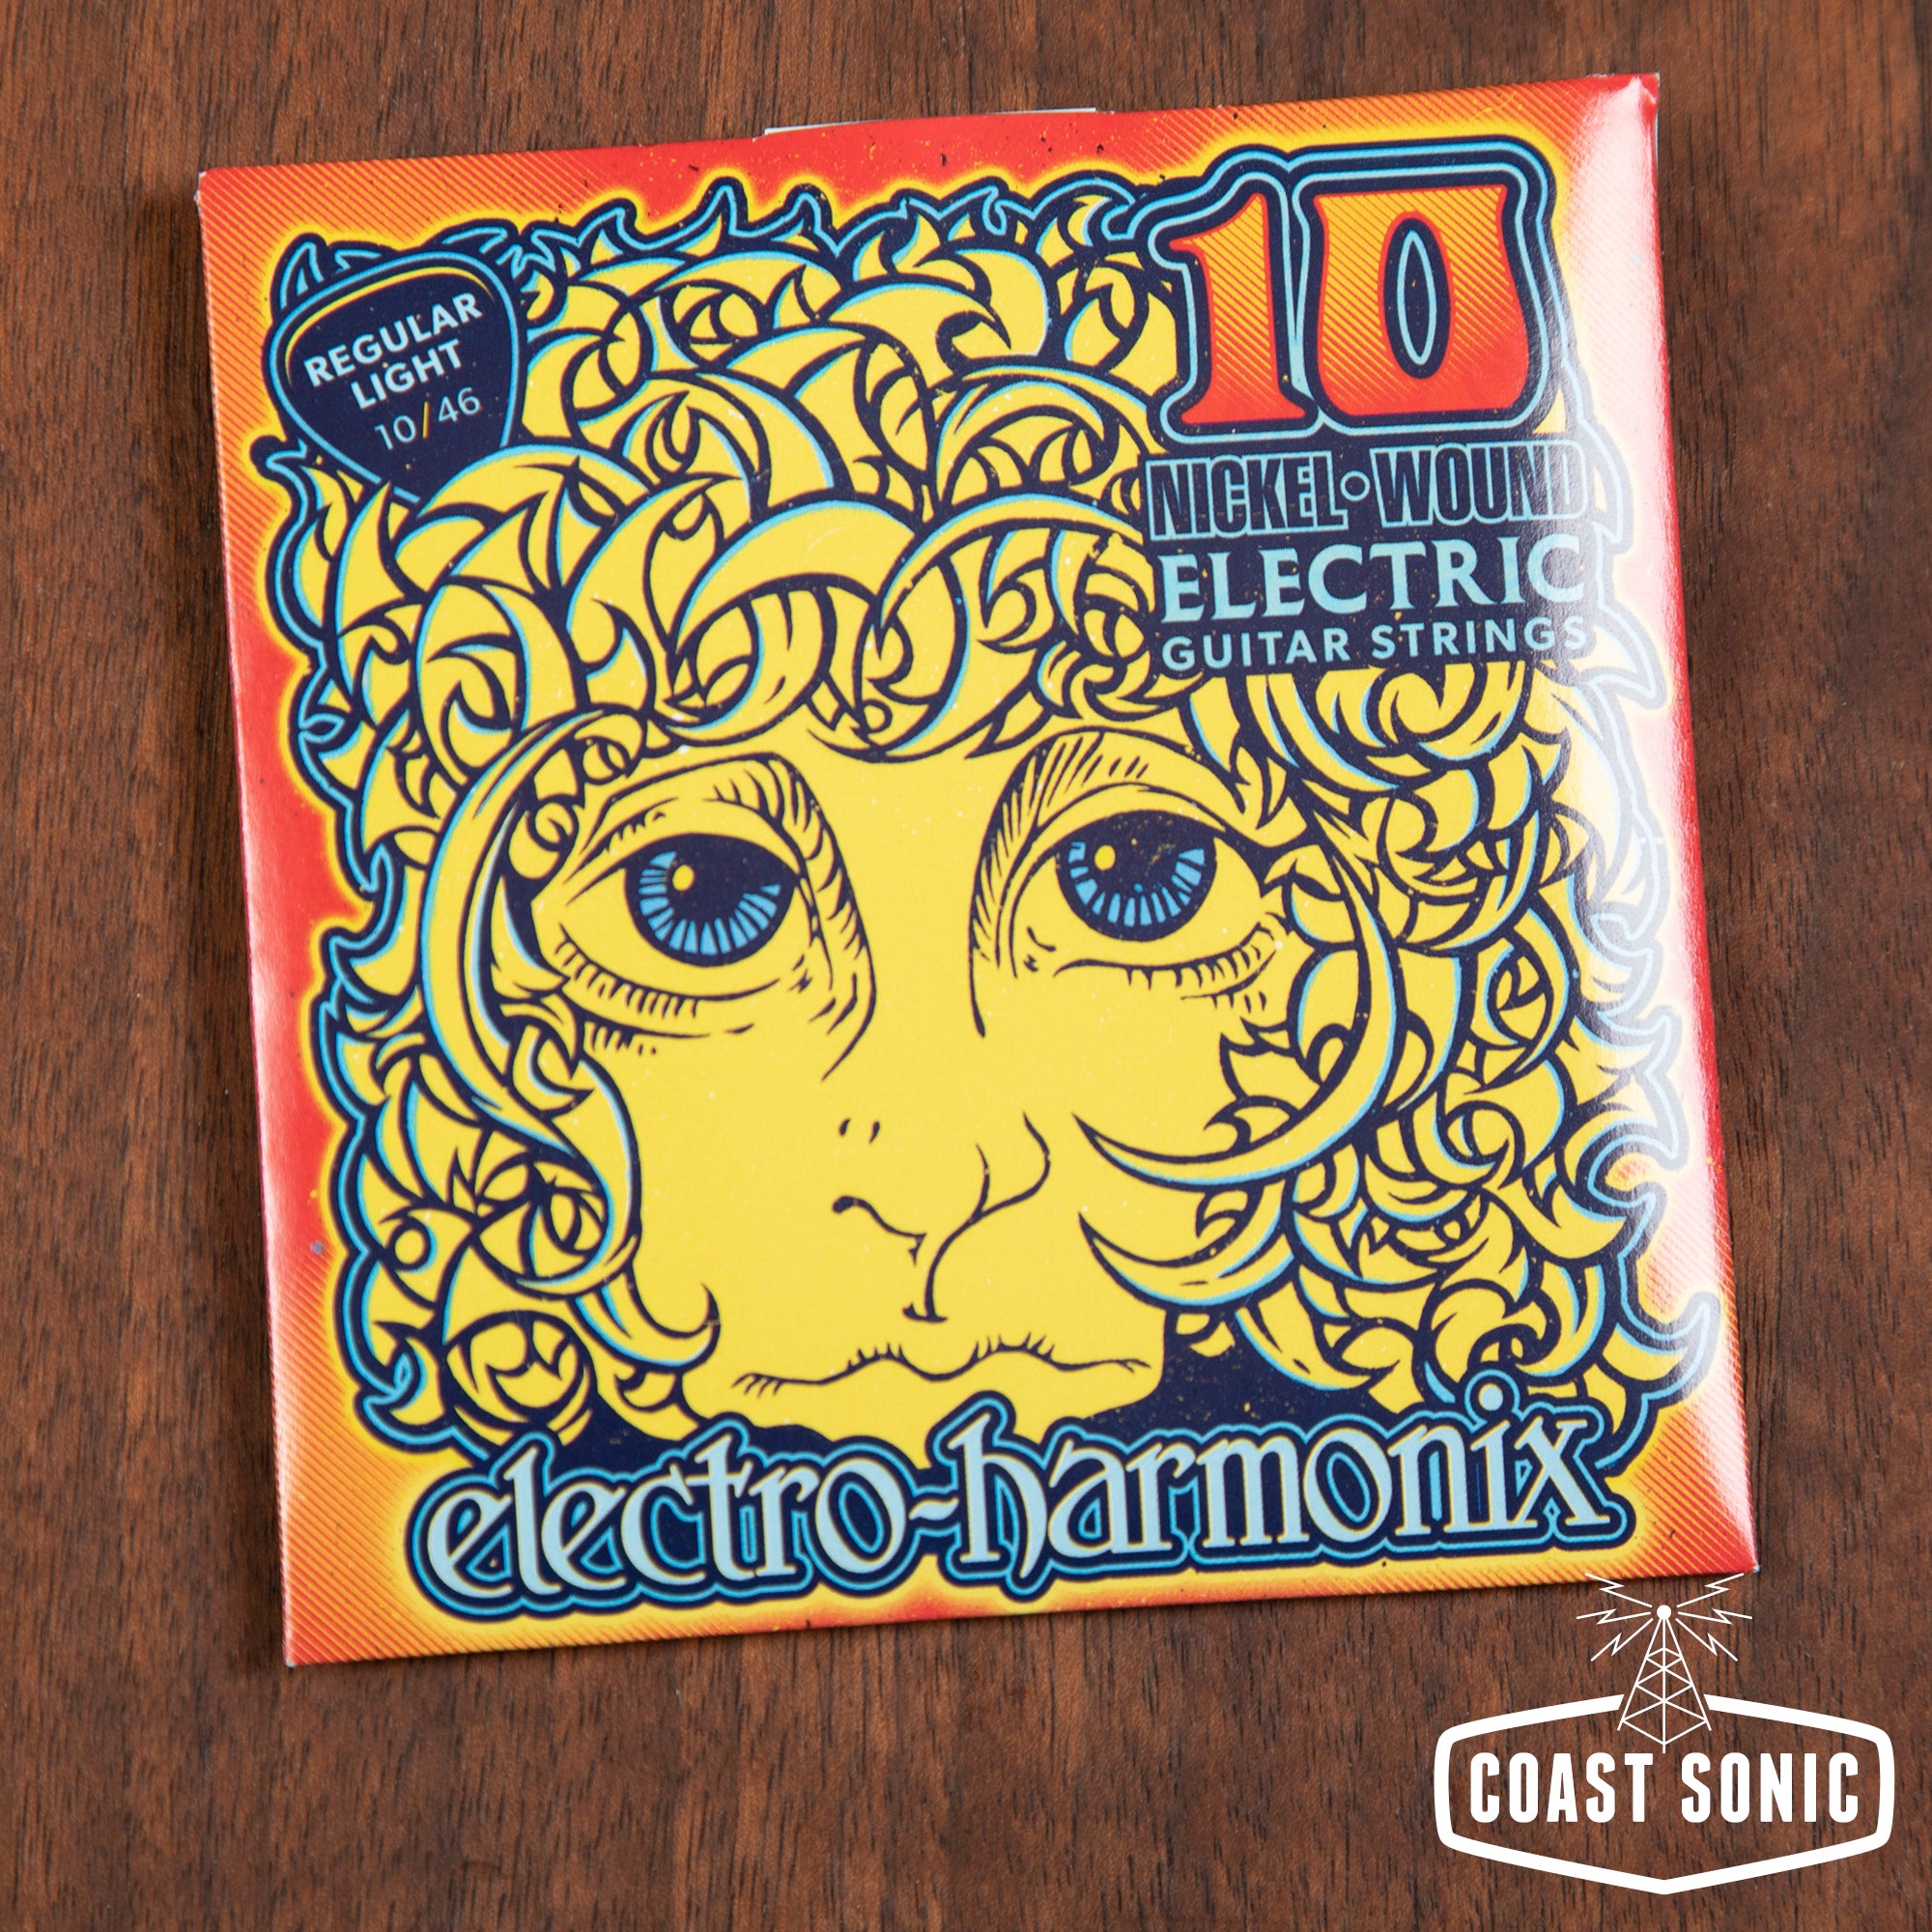 Electro-Harmonix Electric Guitar Strings Regular Light Gauge 10-46